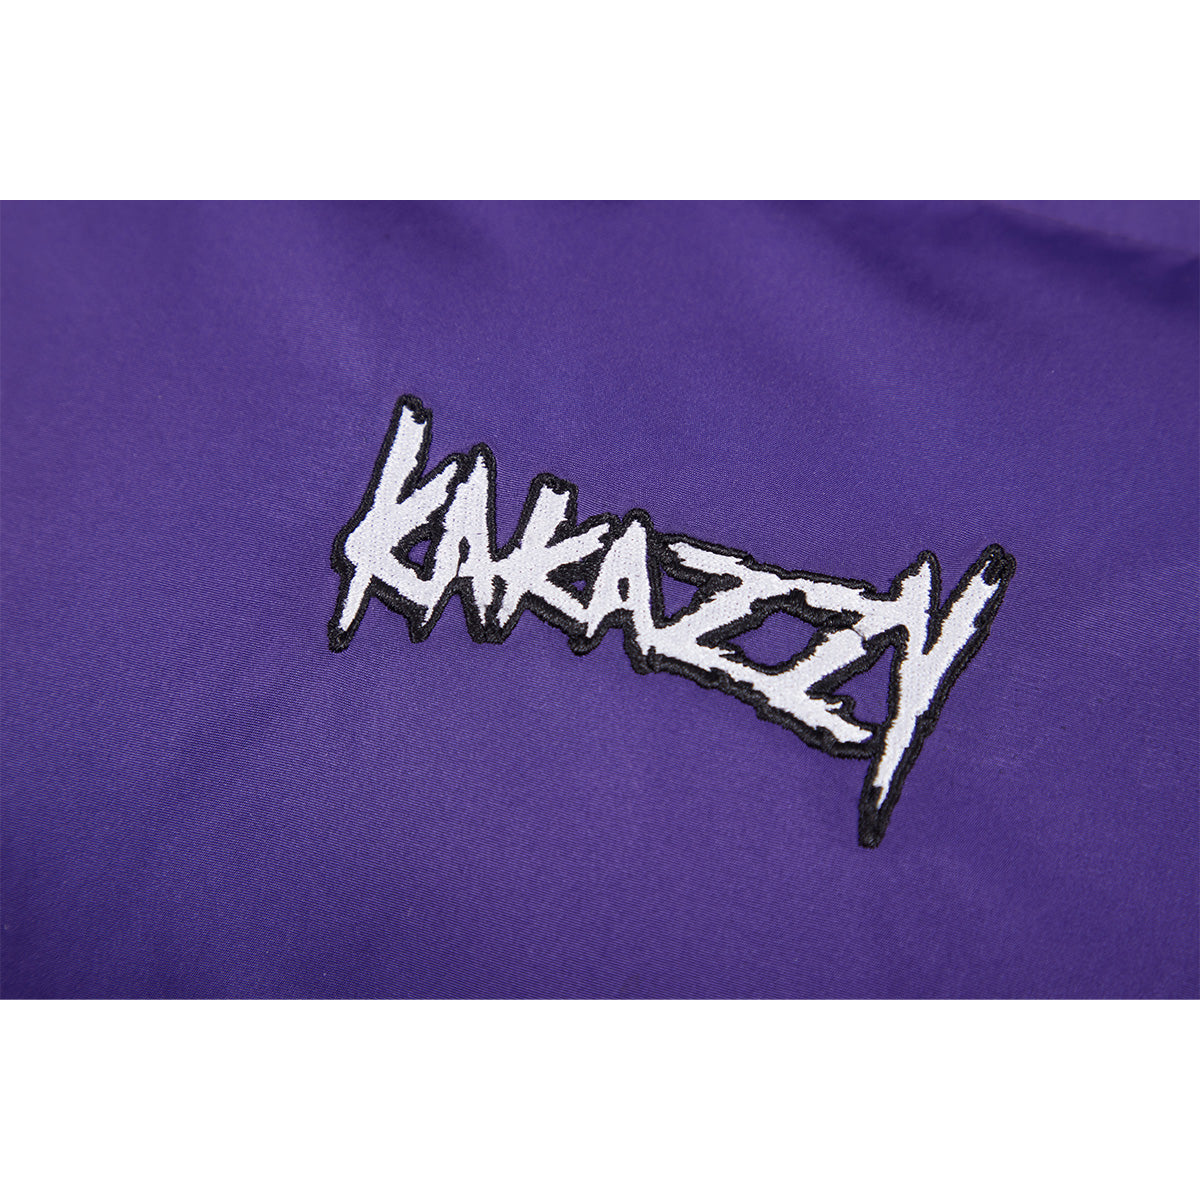 Kakazzy Puffer Jacket Purple